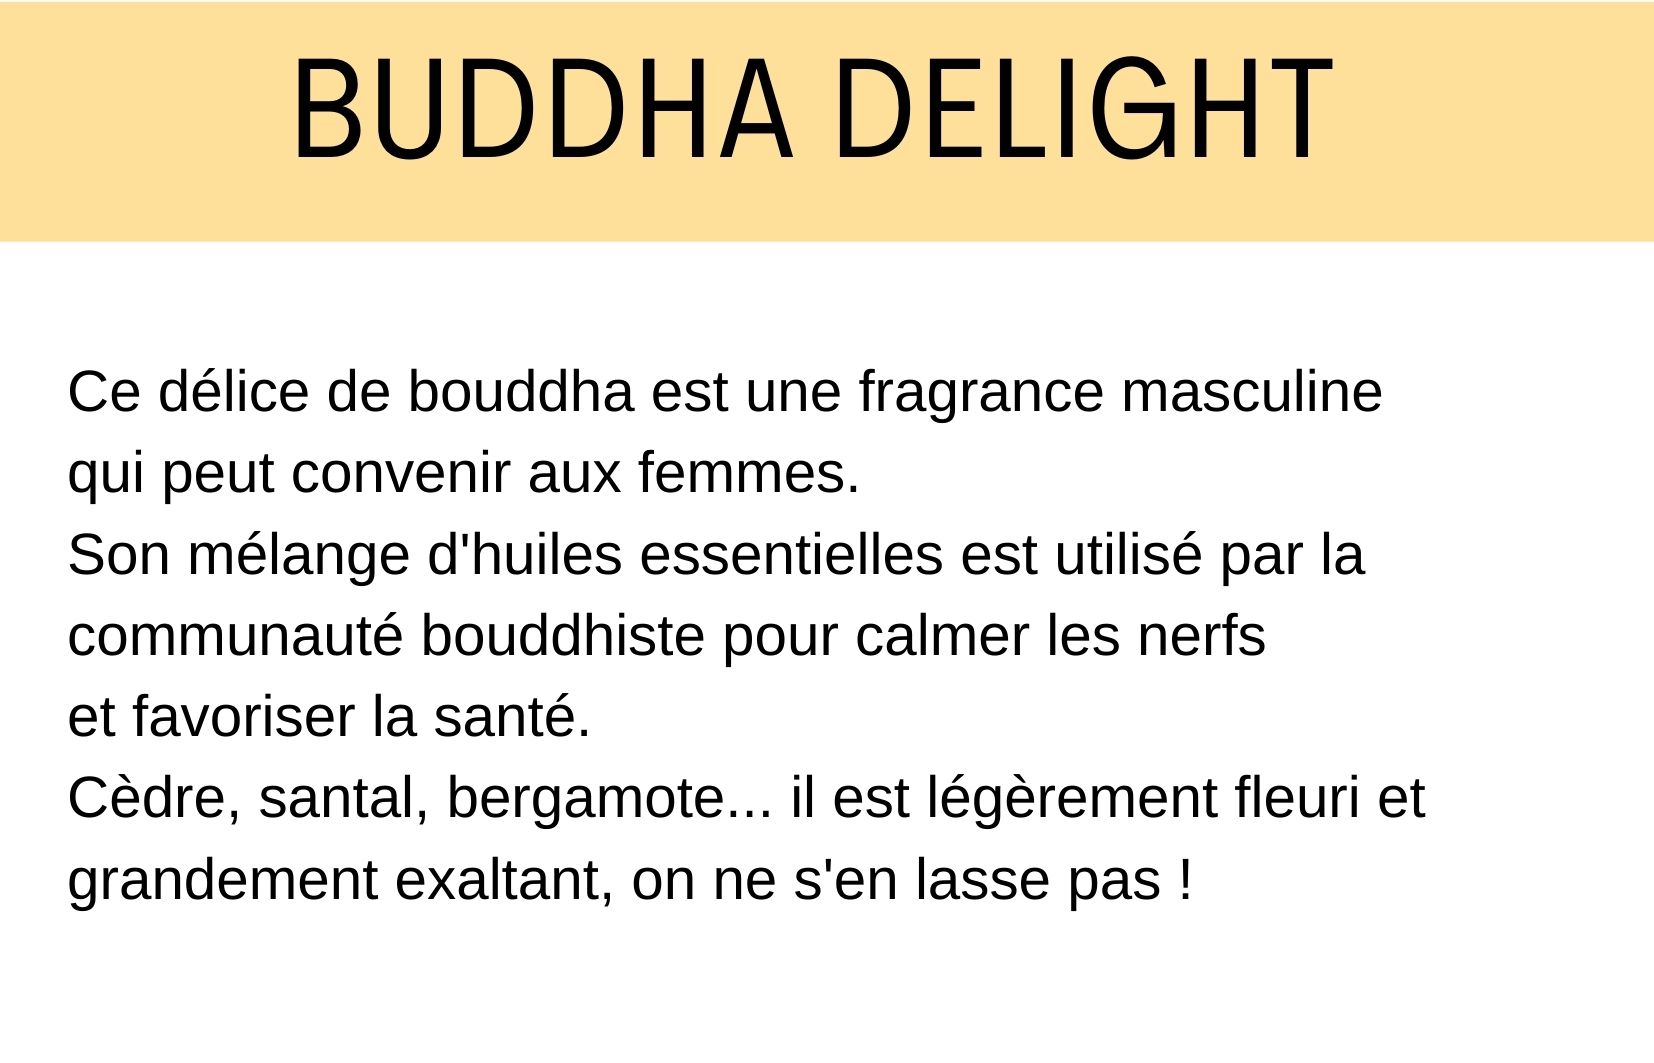 Description parfum buddha delight